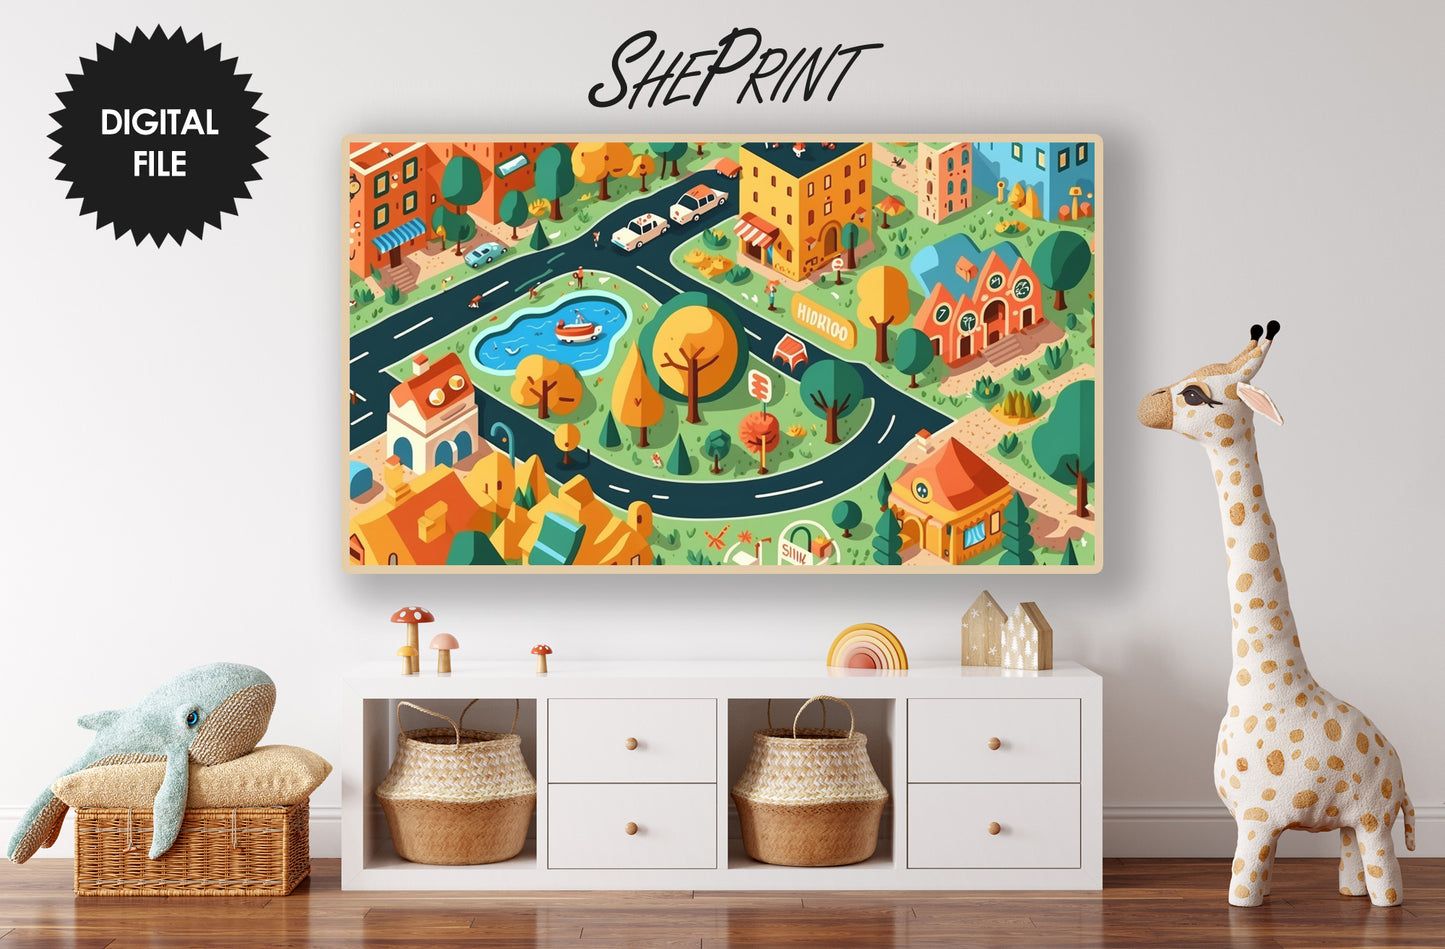 Little City Bundle TV Art Set of 6 | Abstract City Road Maps | Samsung Frame Tv Art For Kids | Digital Tv Art AI Created | Instant Download